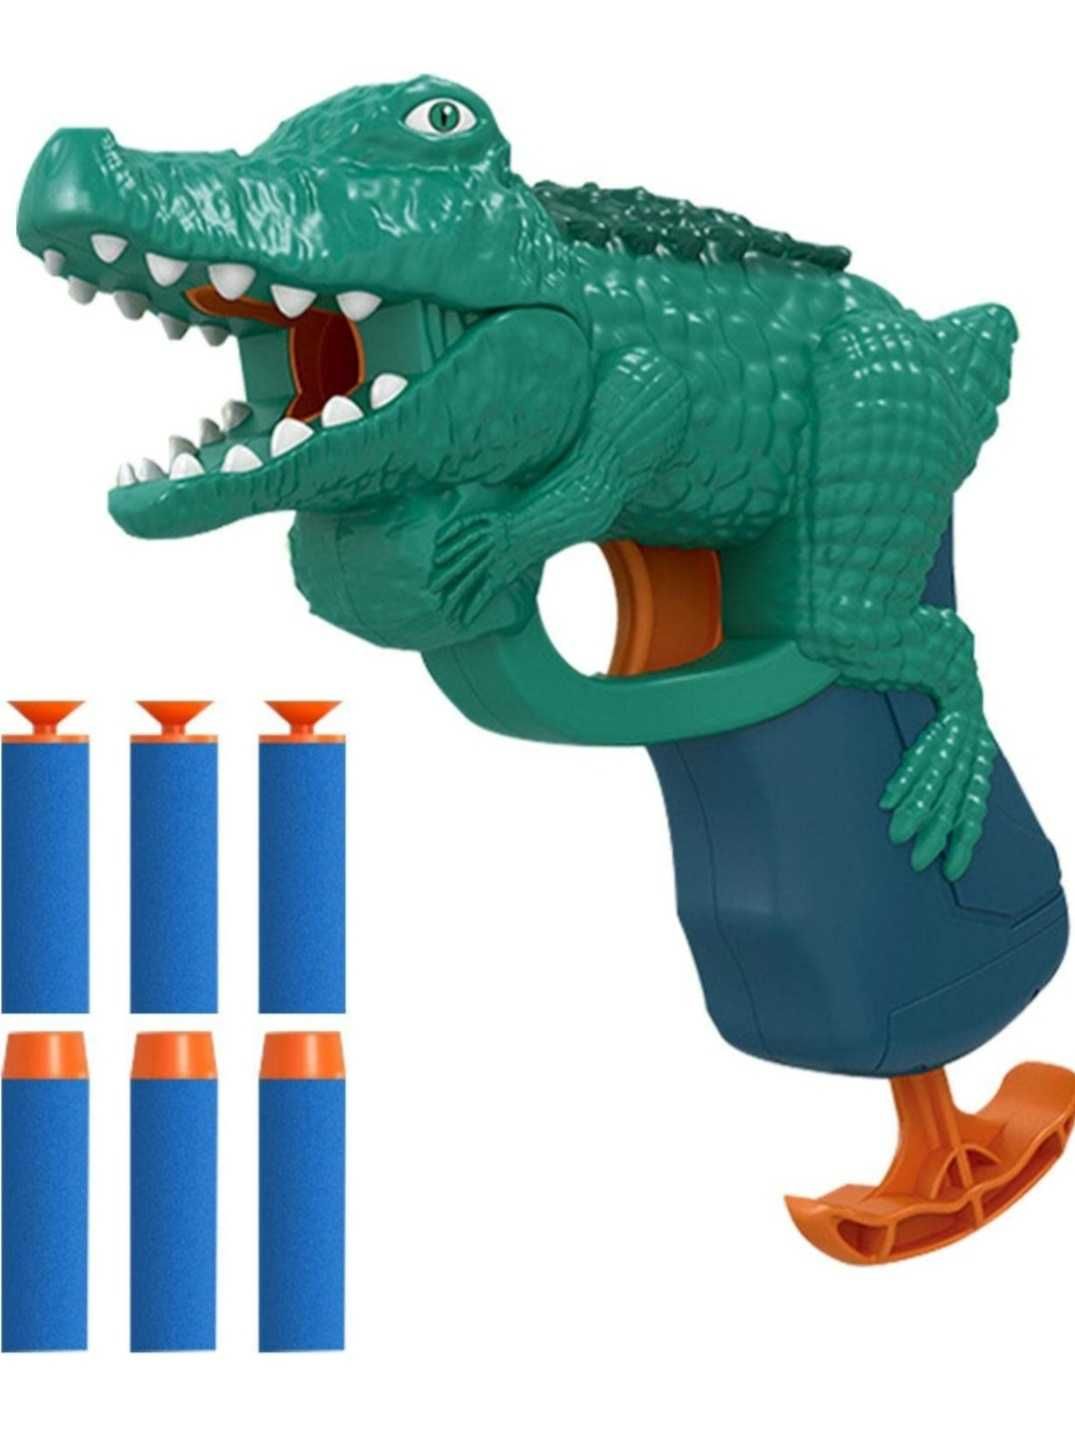 Бластер пистолет Nerf Крокодил, 4 цвета, 6 пуль